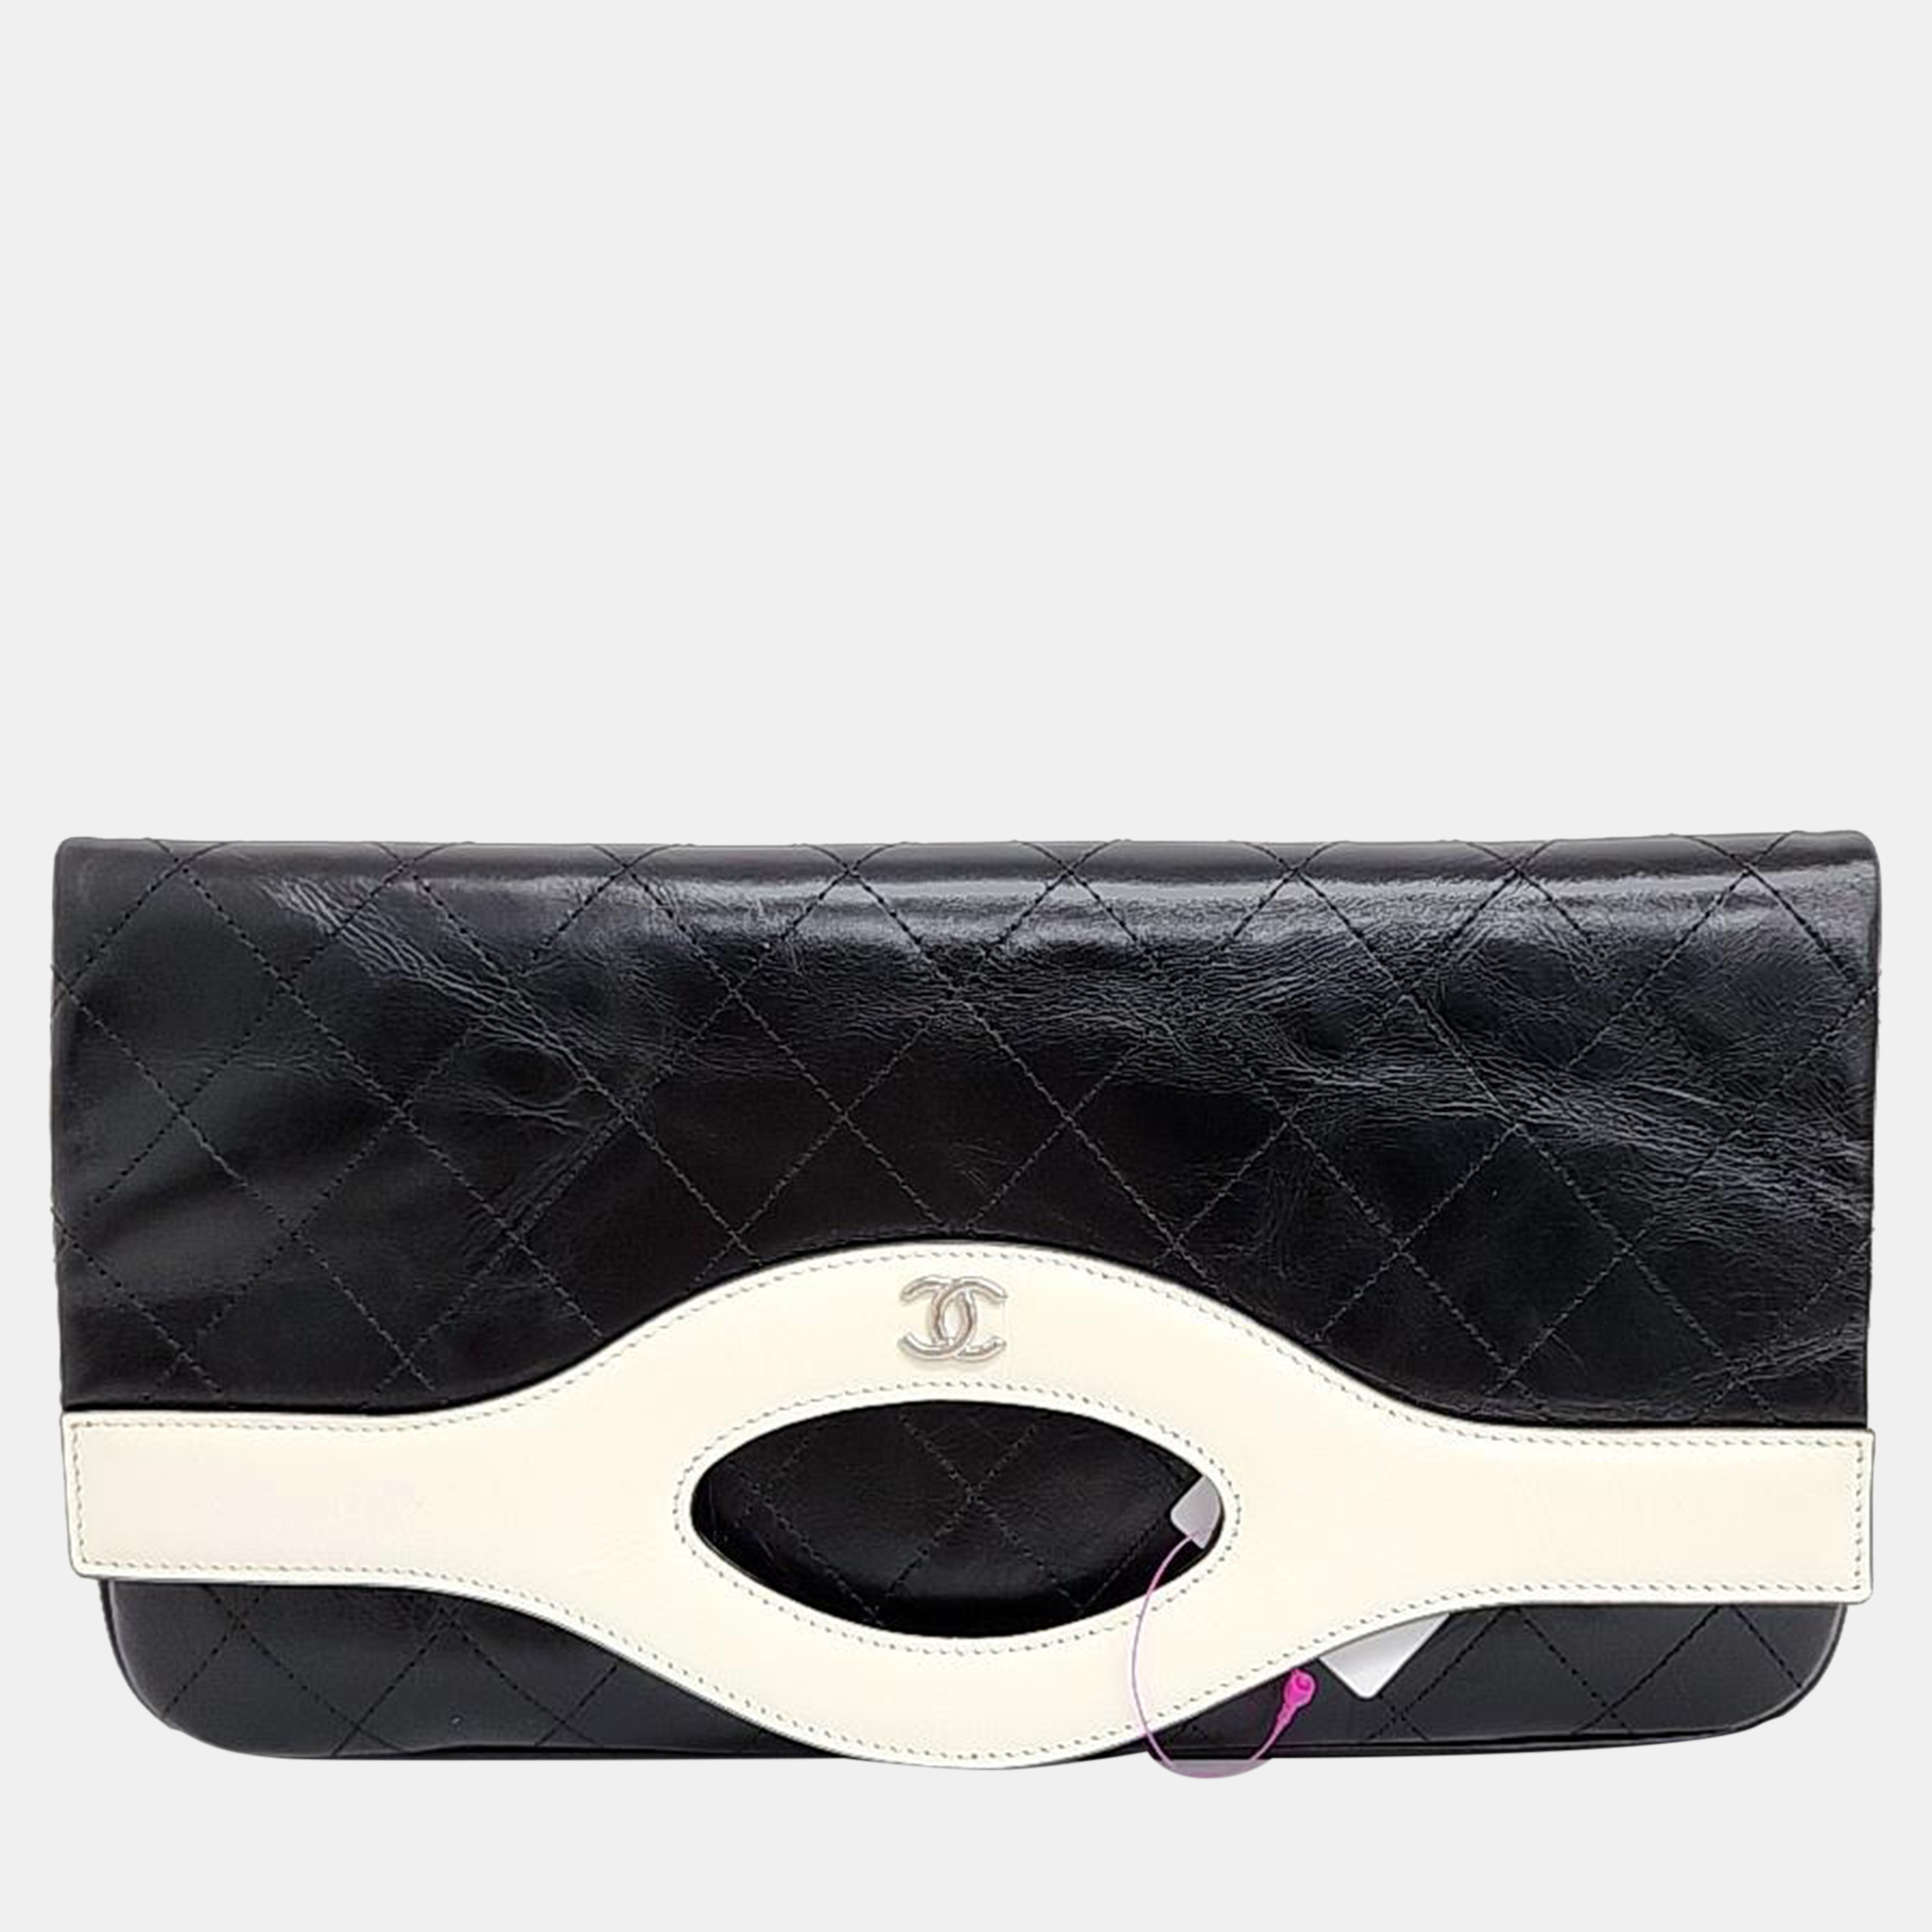 Chanel black/white vintage leather 31 flap clutch bag